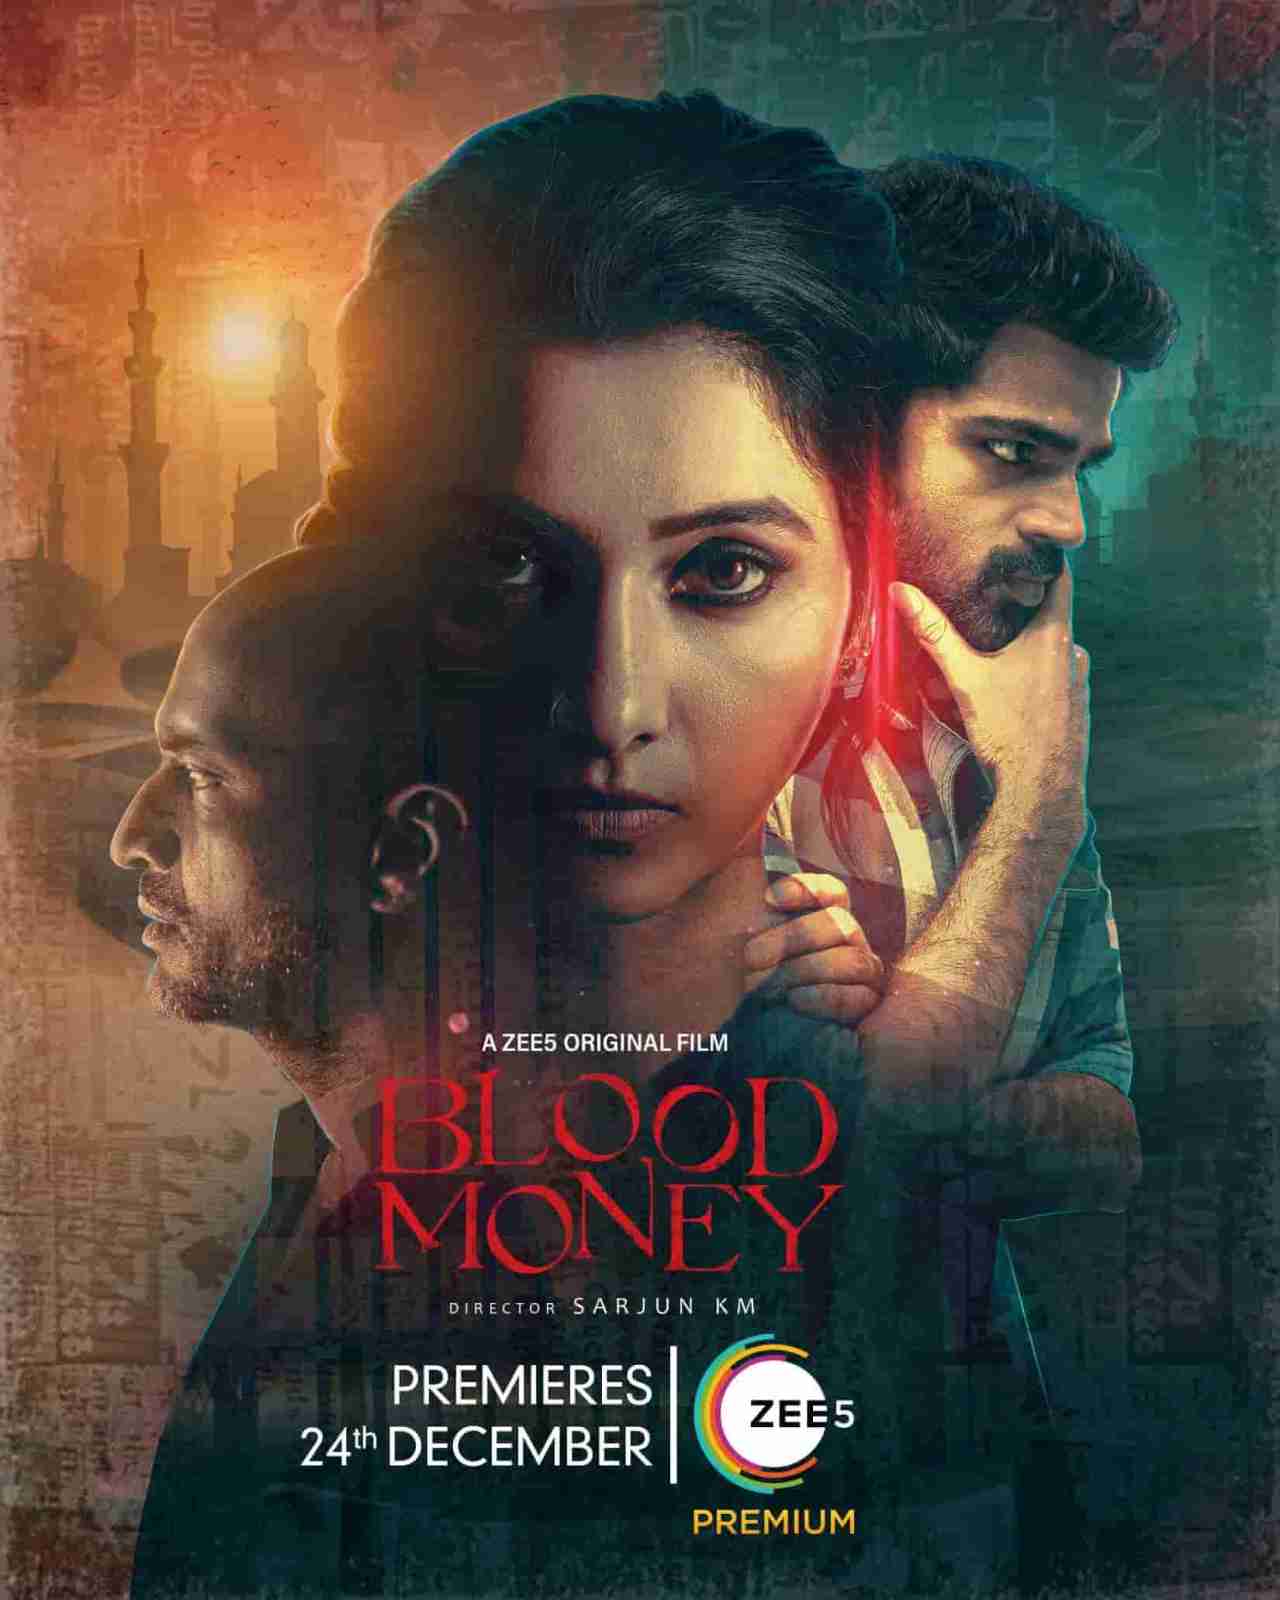 Blood Money Official Teaser of an A ZEE5 Original Film Starring Priya Bhavani Shankar